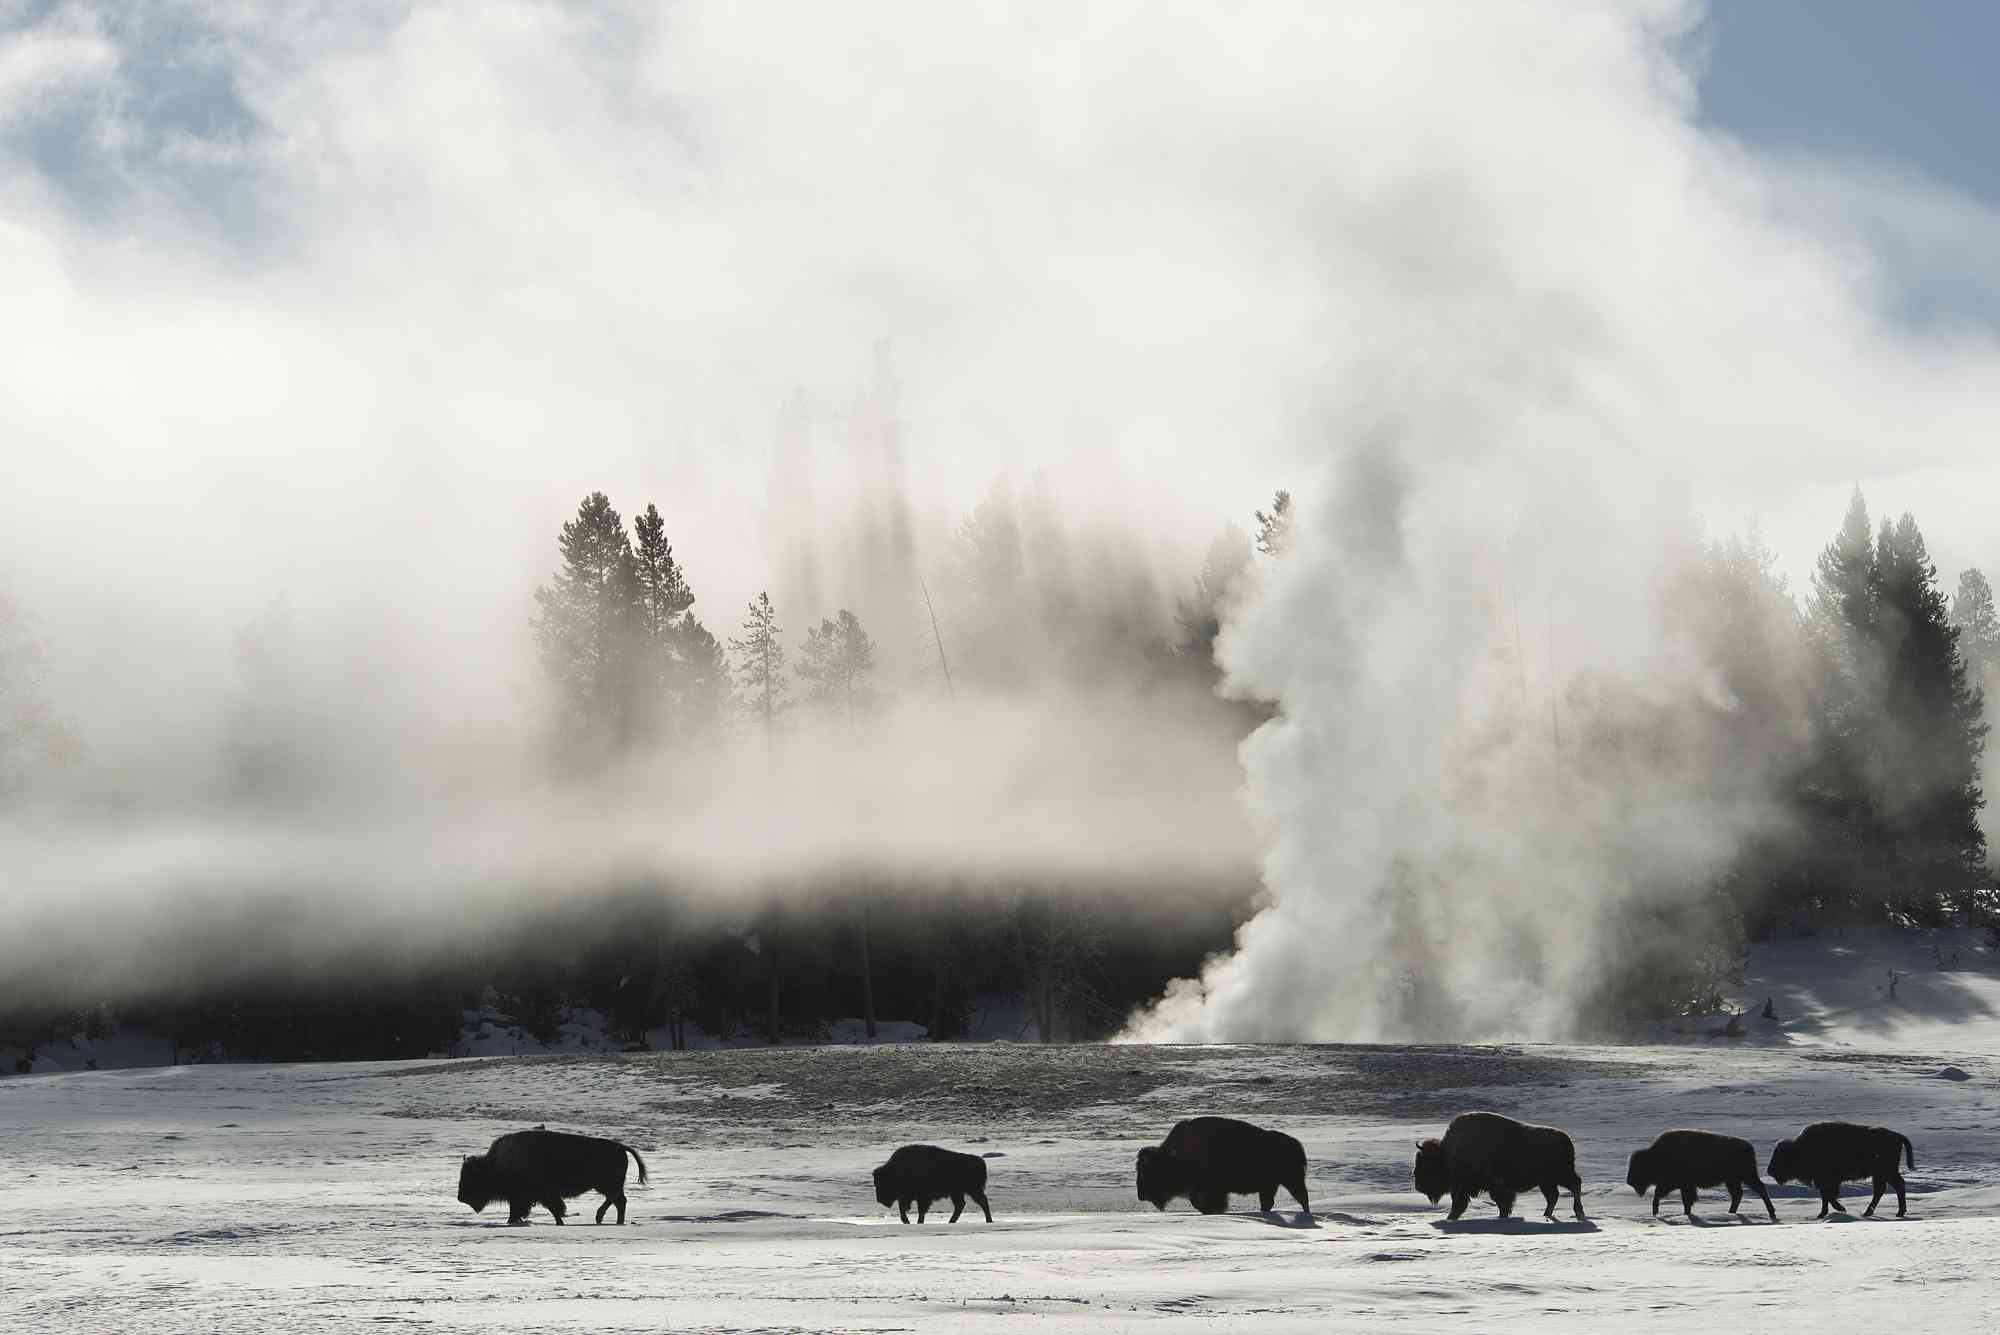 2013.02.15 - Bison Walking by a Geyser - Yellowstone National Park - Wyoming - Barbara Swanson